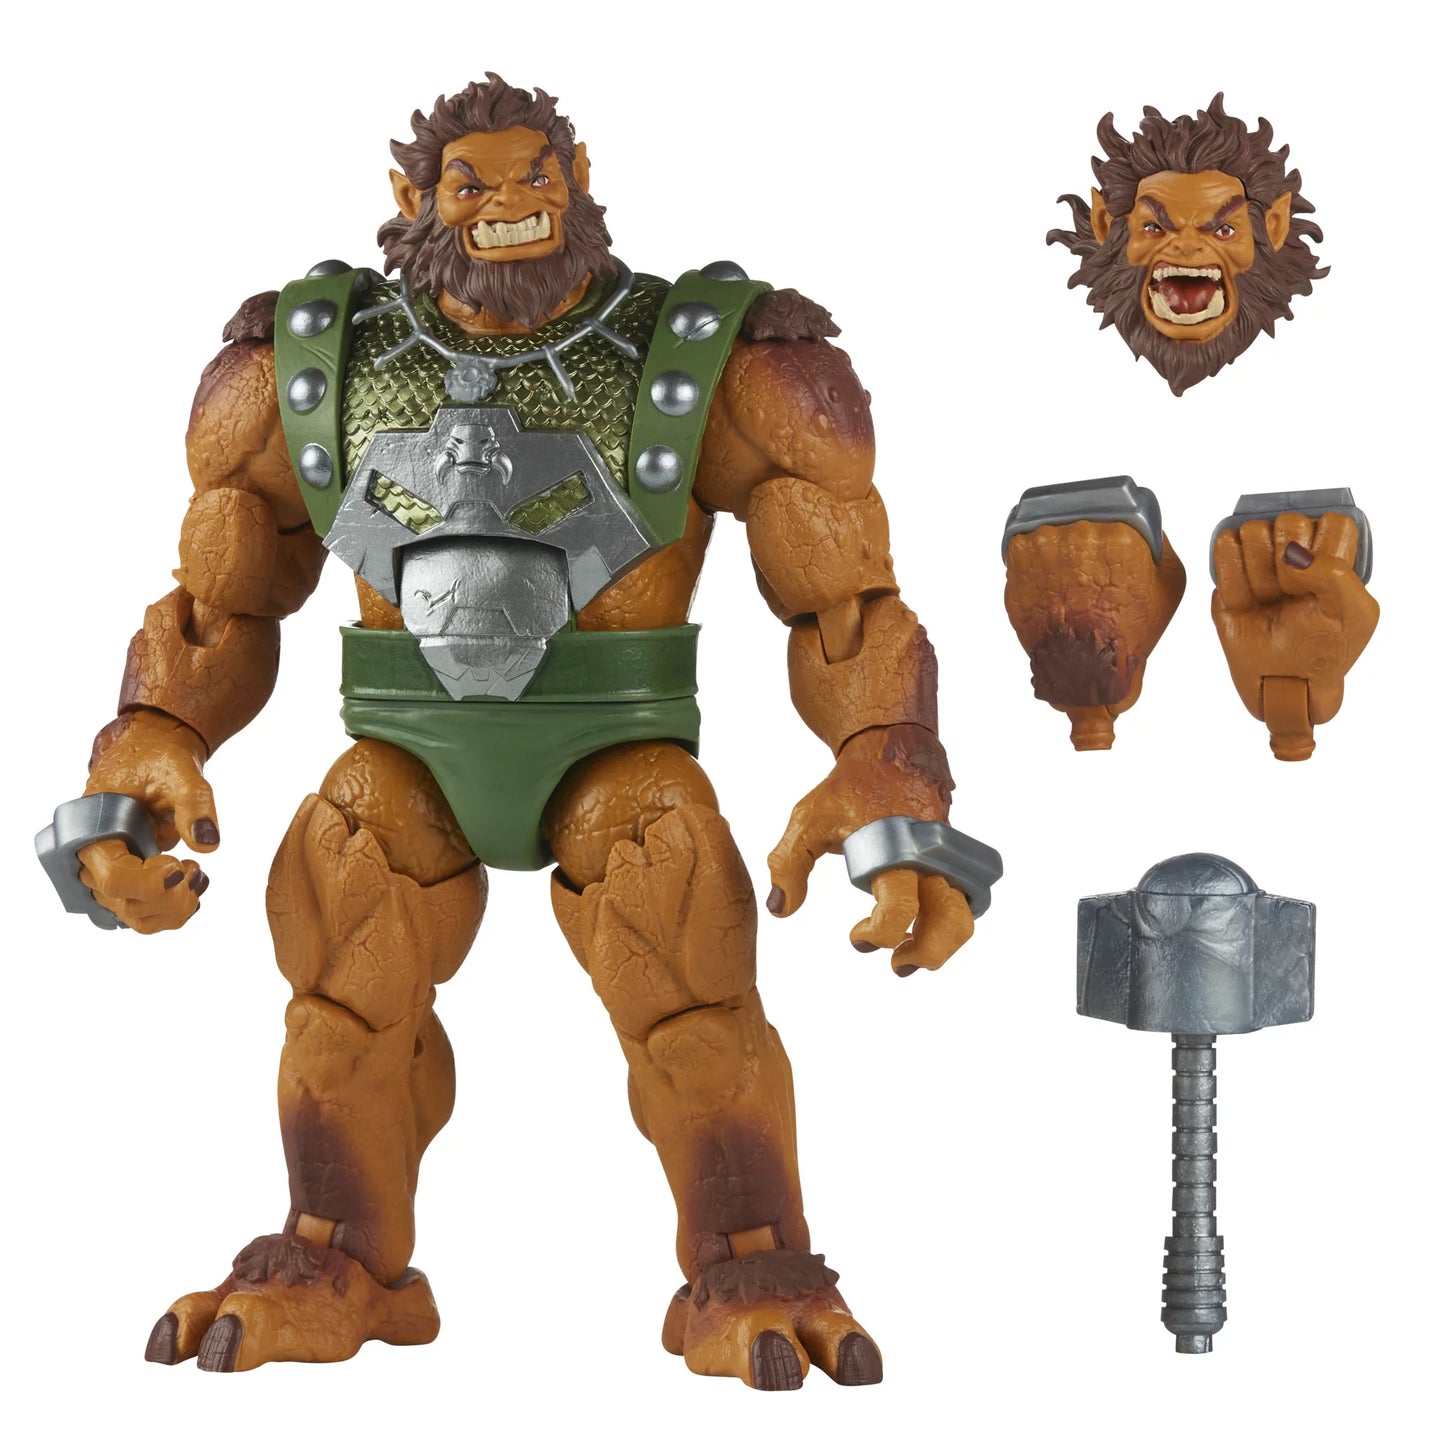 Marvel Legends Ulik the Troll King Action Figure Collectible, Walmart Exclusive